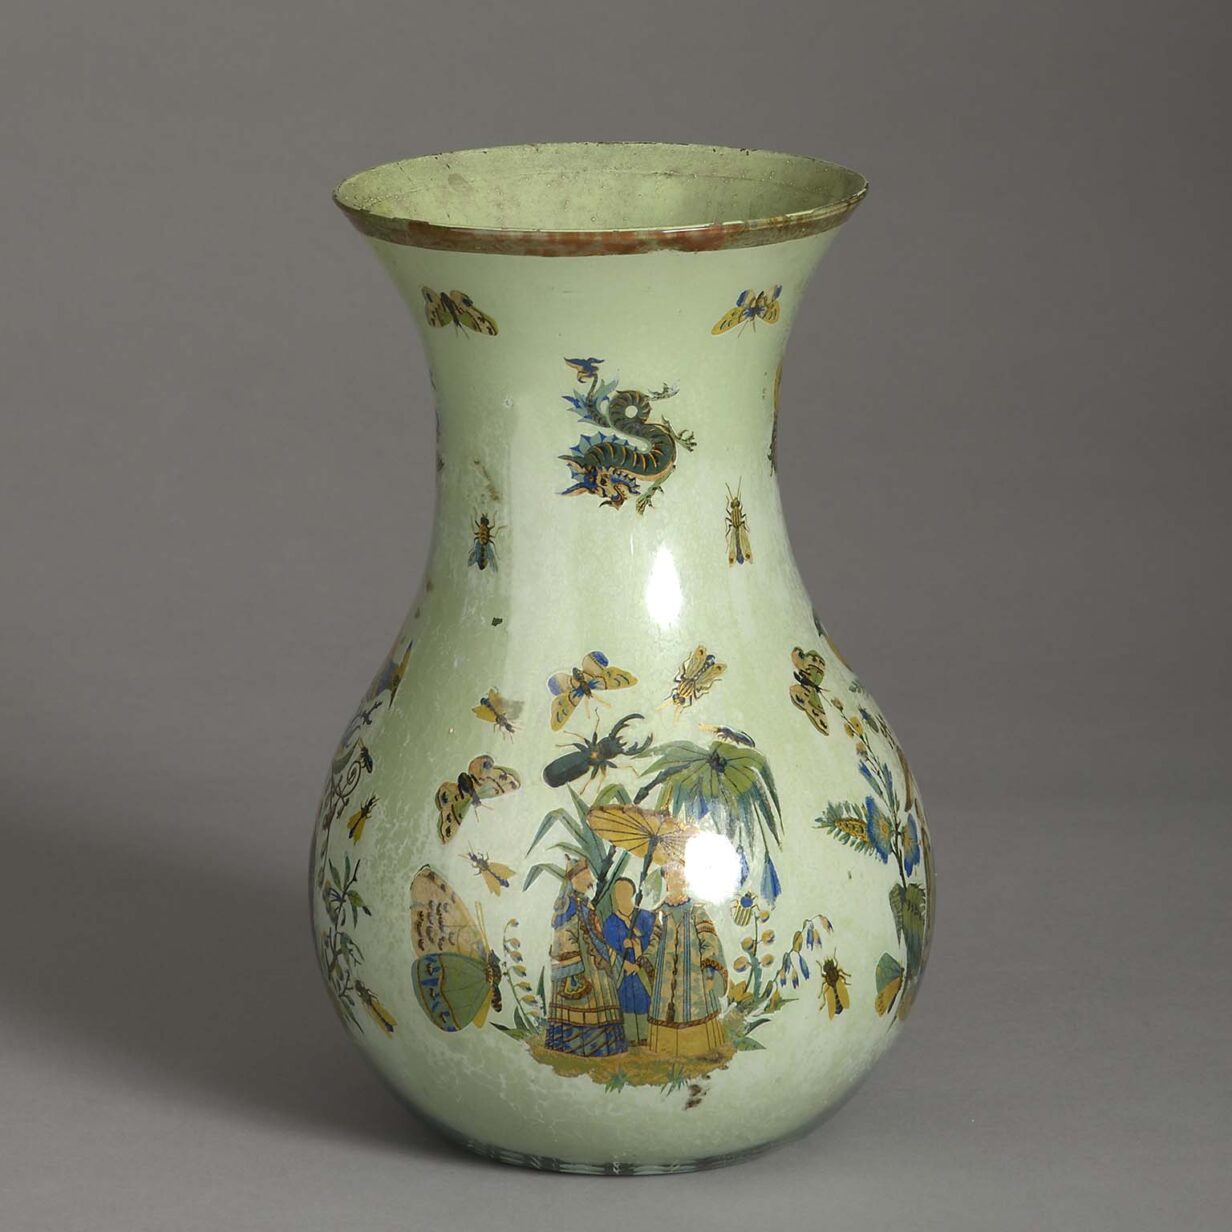 19th century decalcomania glass vase